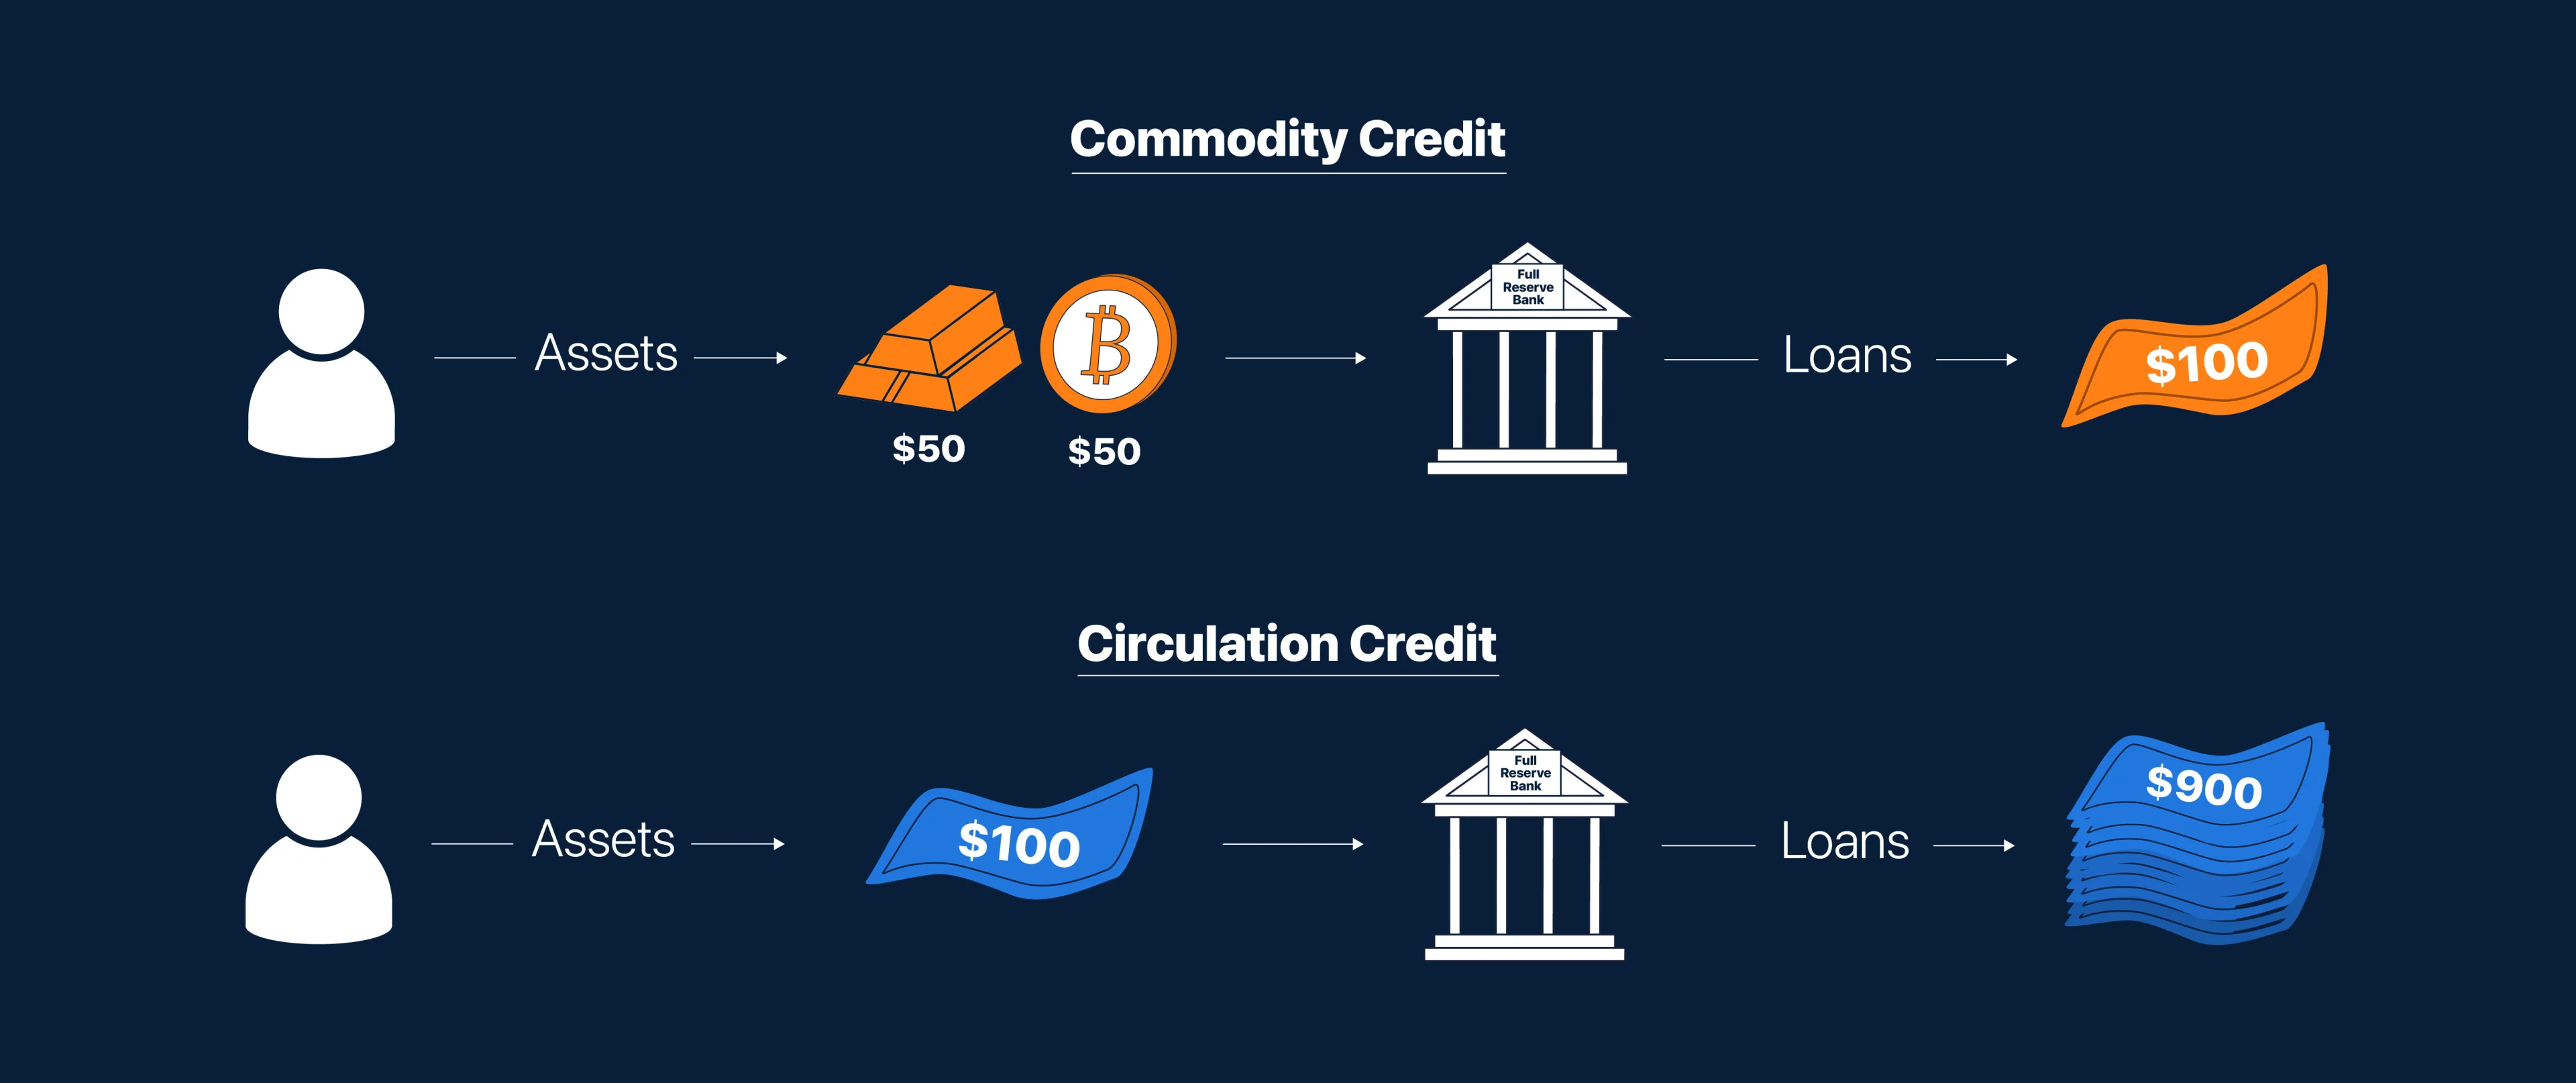 Commodity Credit vs Circulation Credit